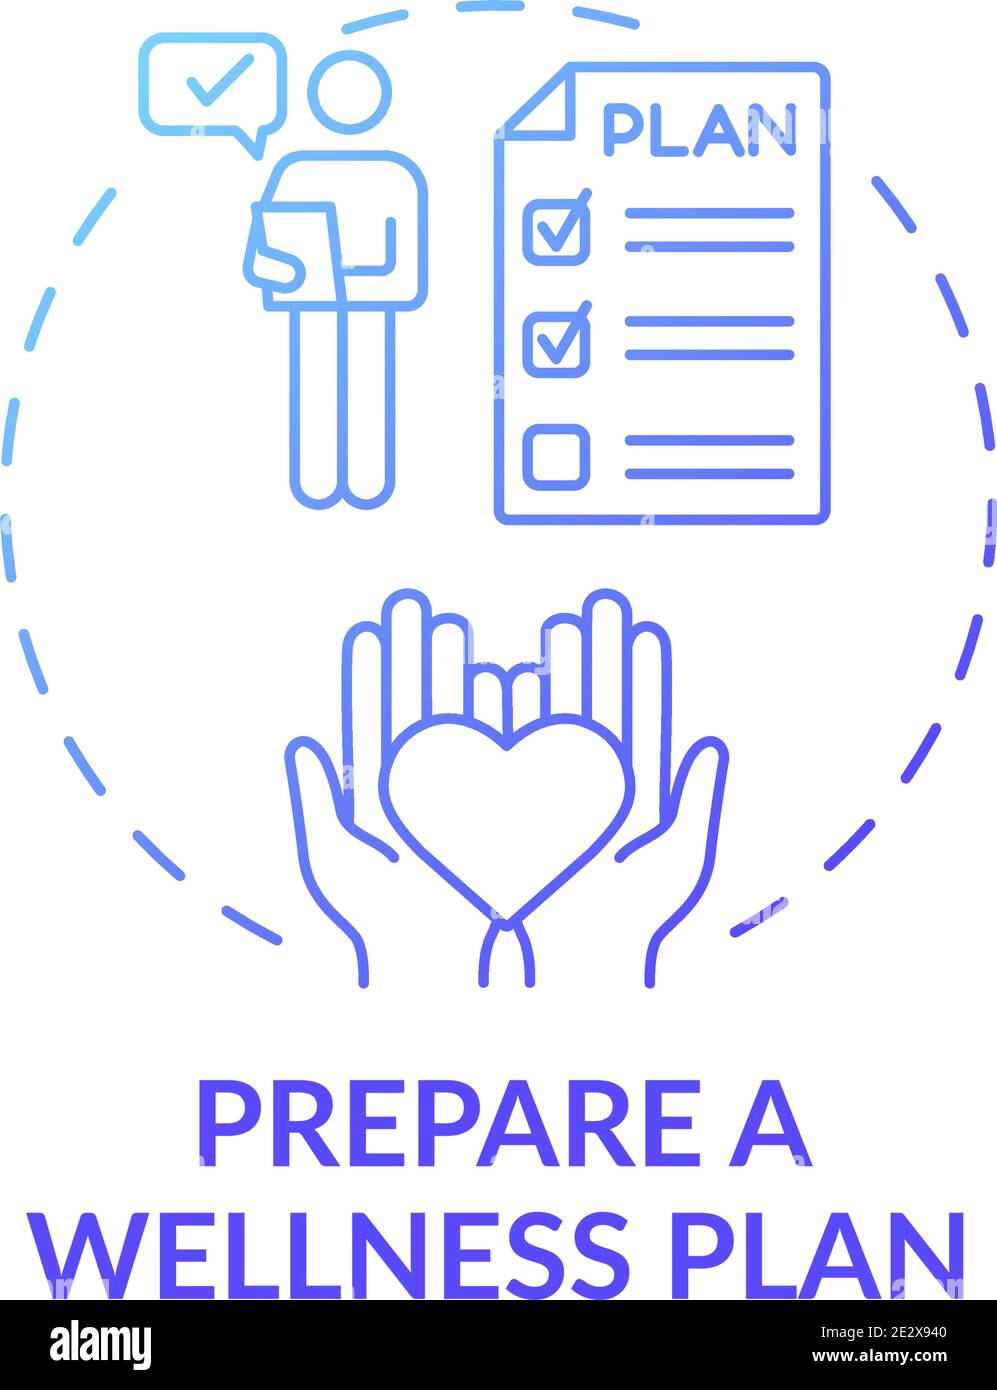 Wellness plan preparation concept icon Stock Vector